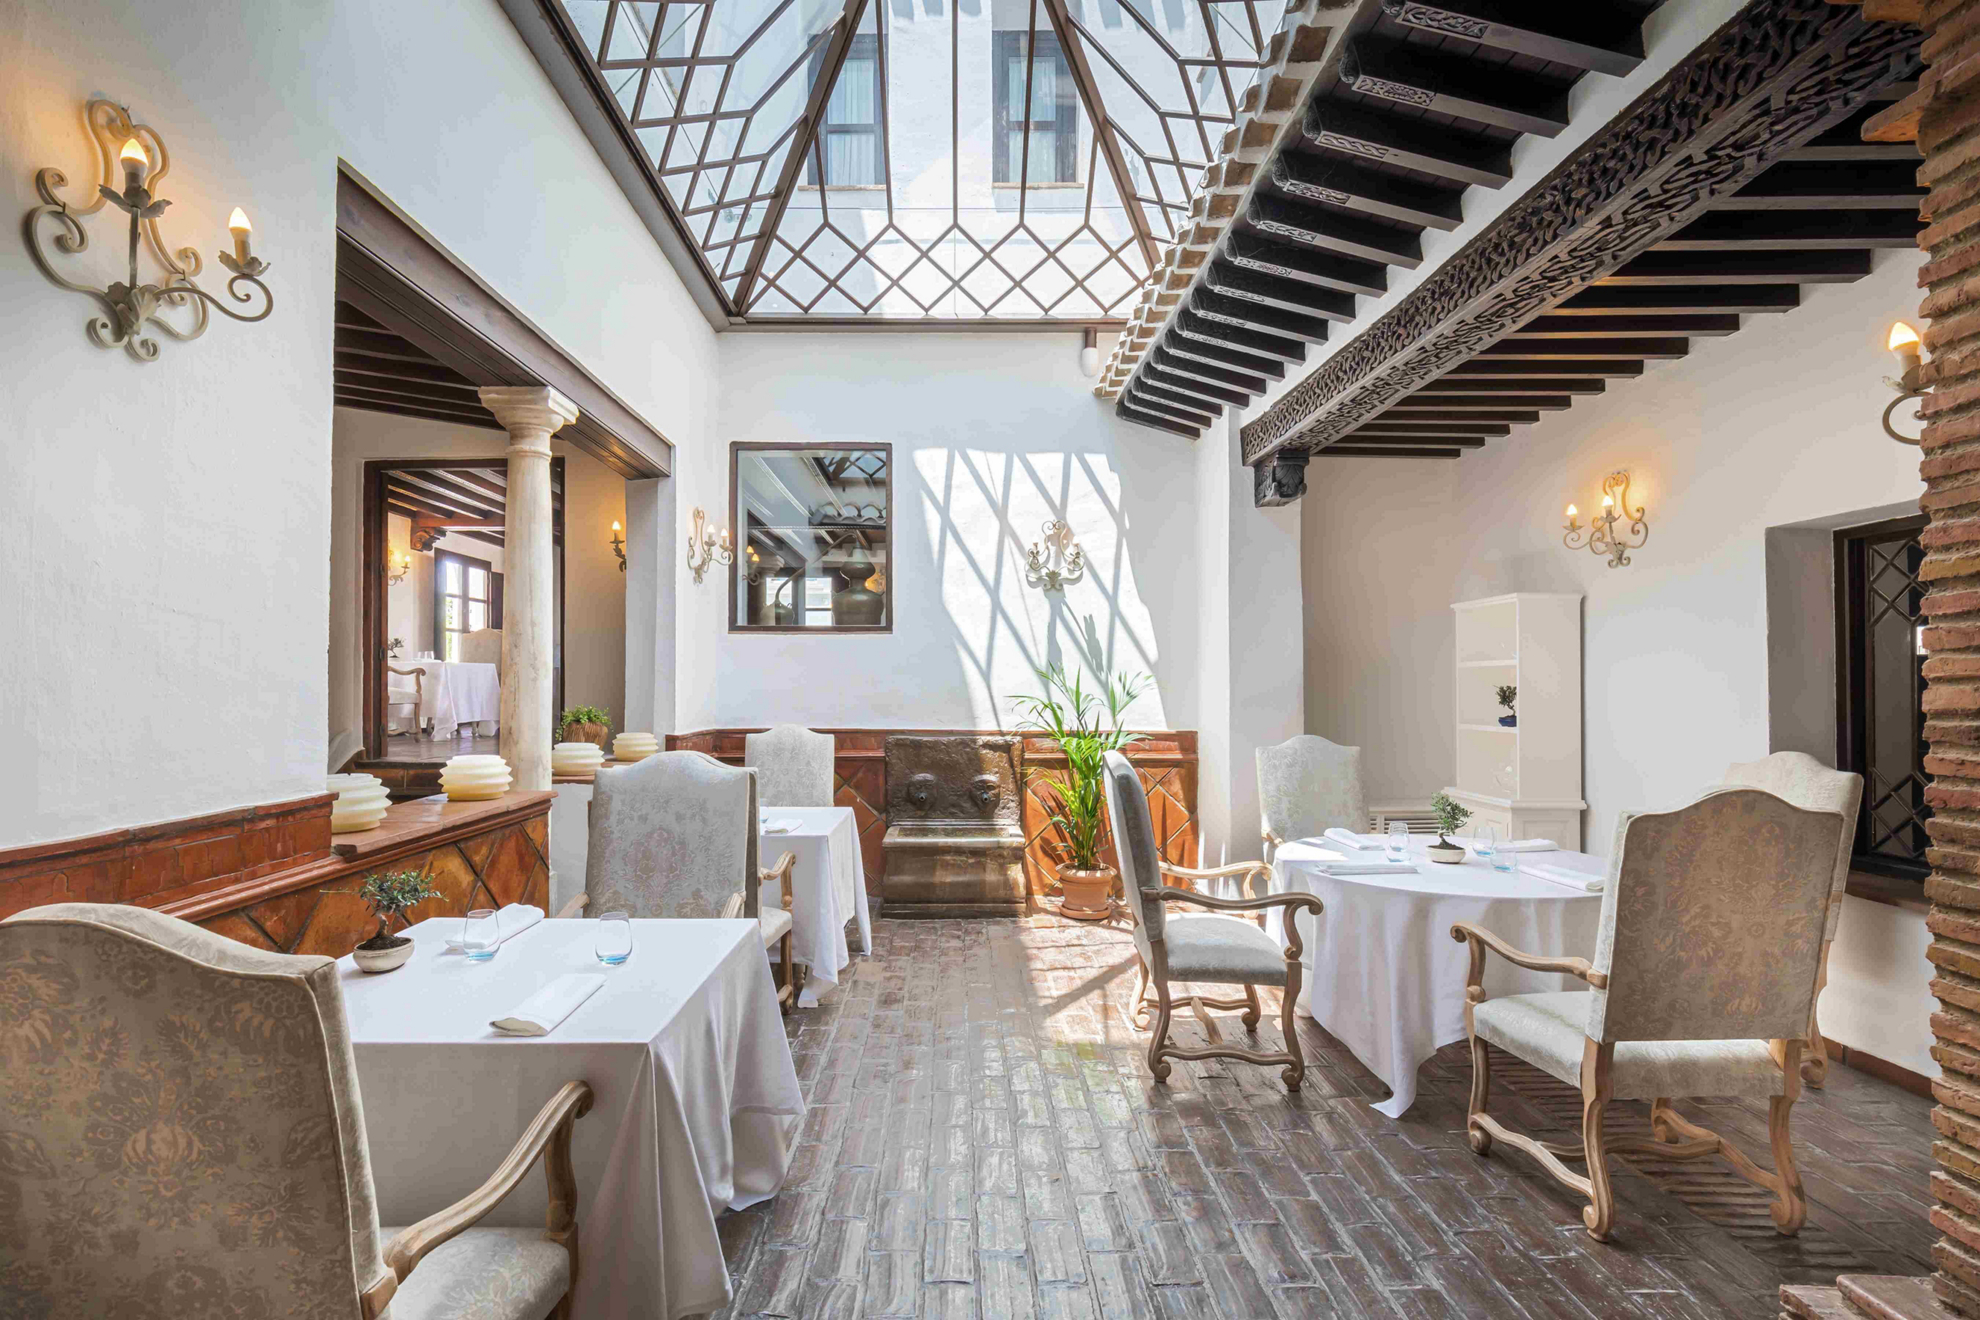 Hotels with Michelin Star restaurant: Inside La Finca, La Bobadilla a Royal Hideaway Hotel